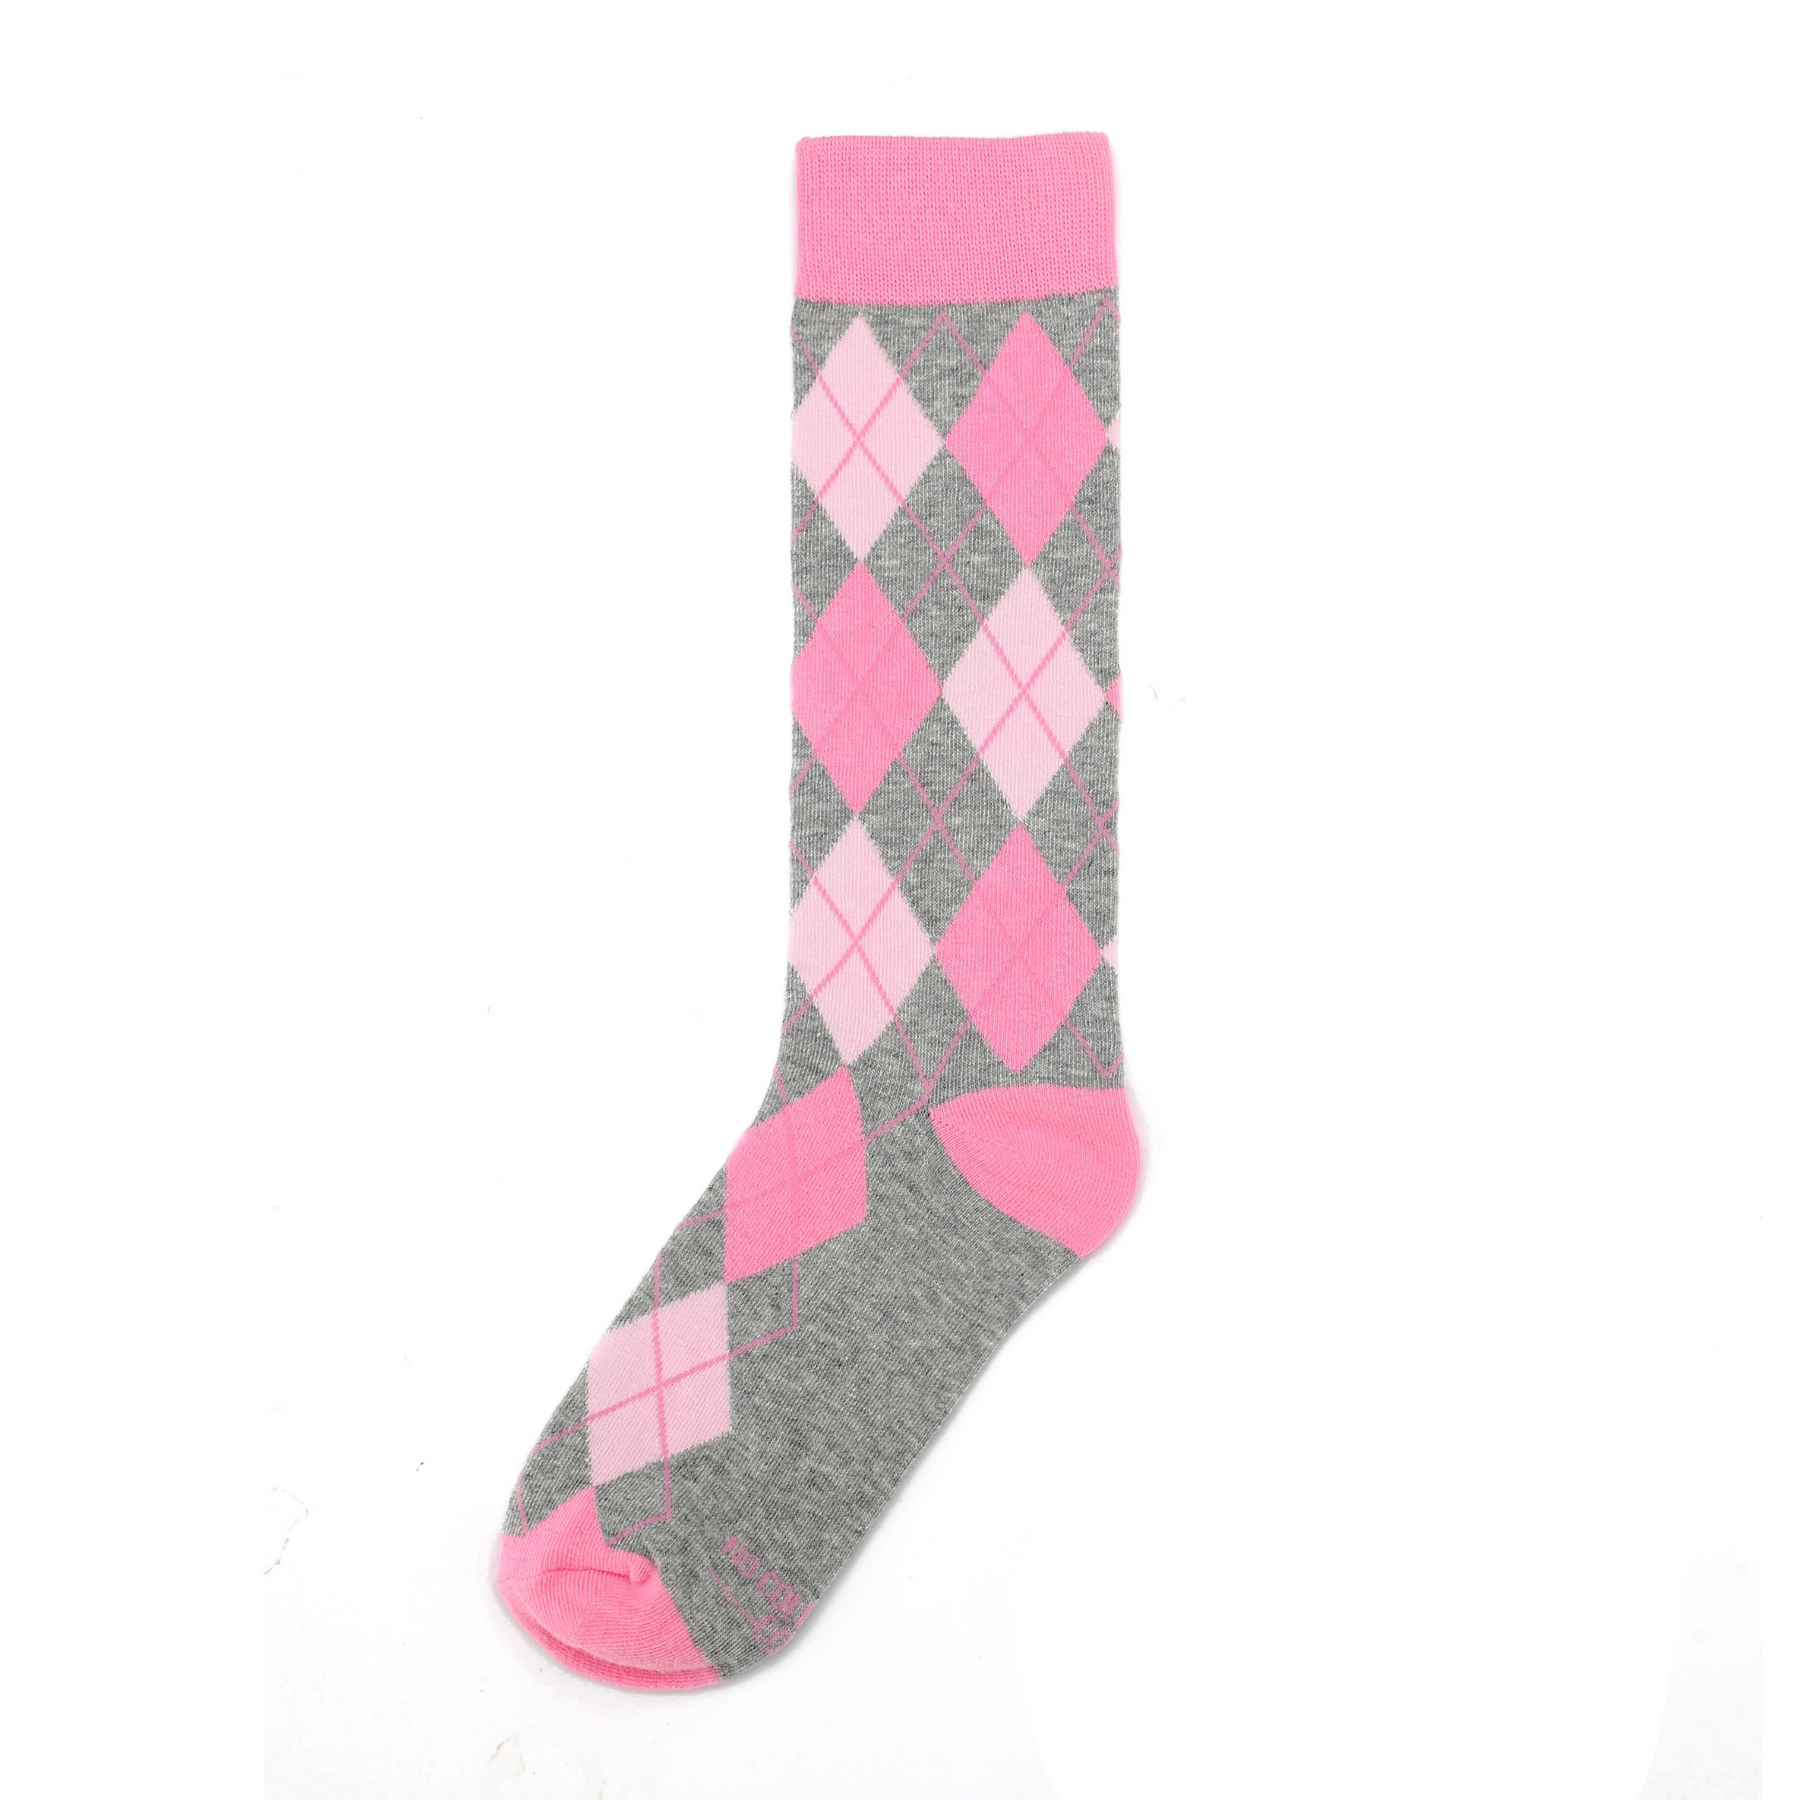 Pink Socks - No Cold Feet